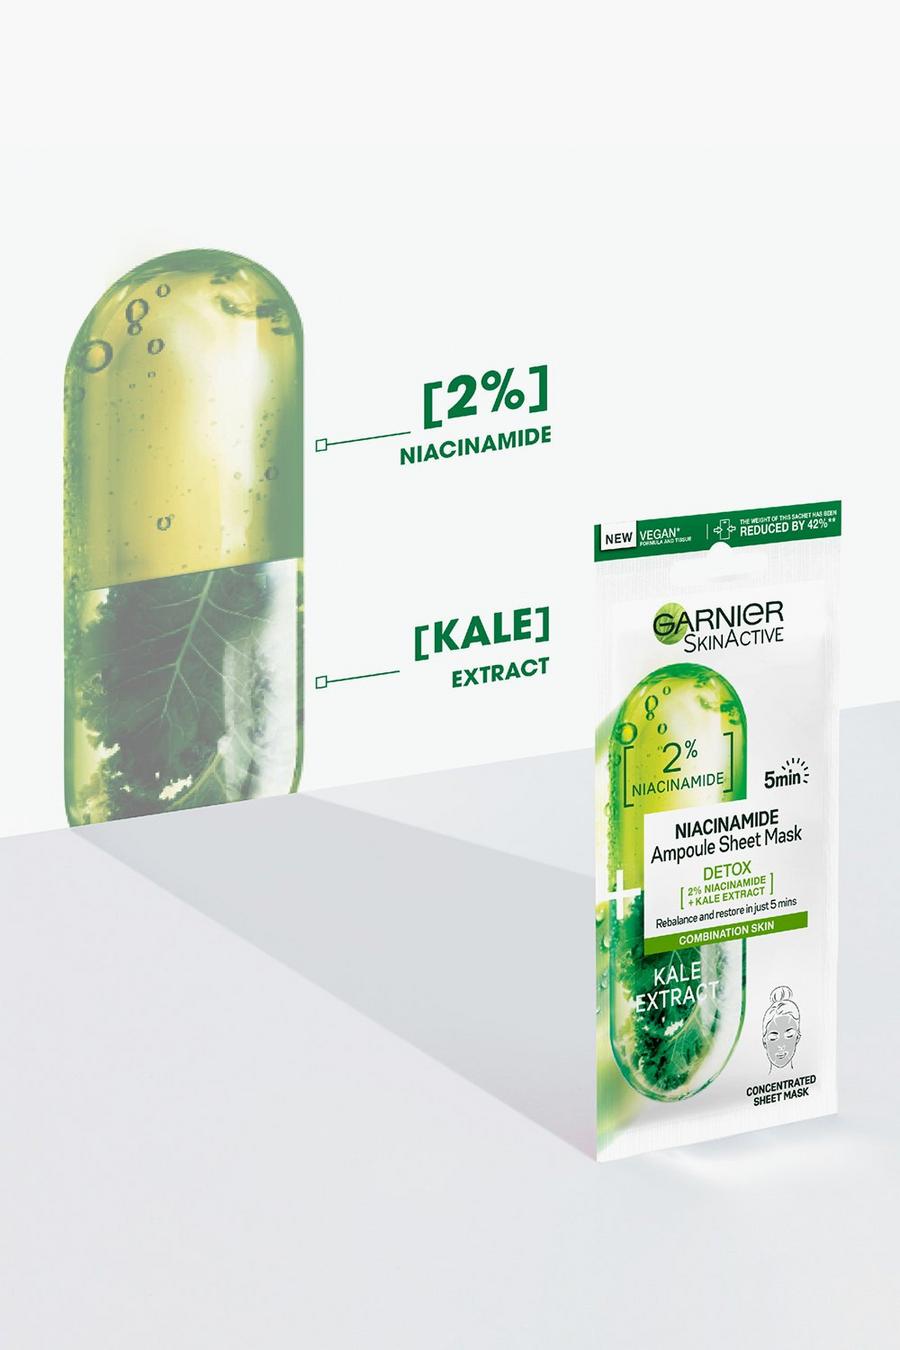 Mascarilla en ampolla de lámina detoxificante Skinactive de Garnier, Verde green